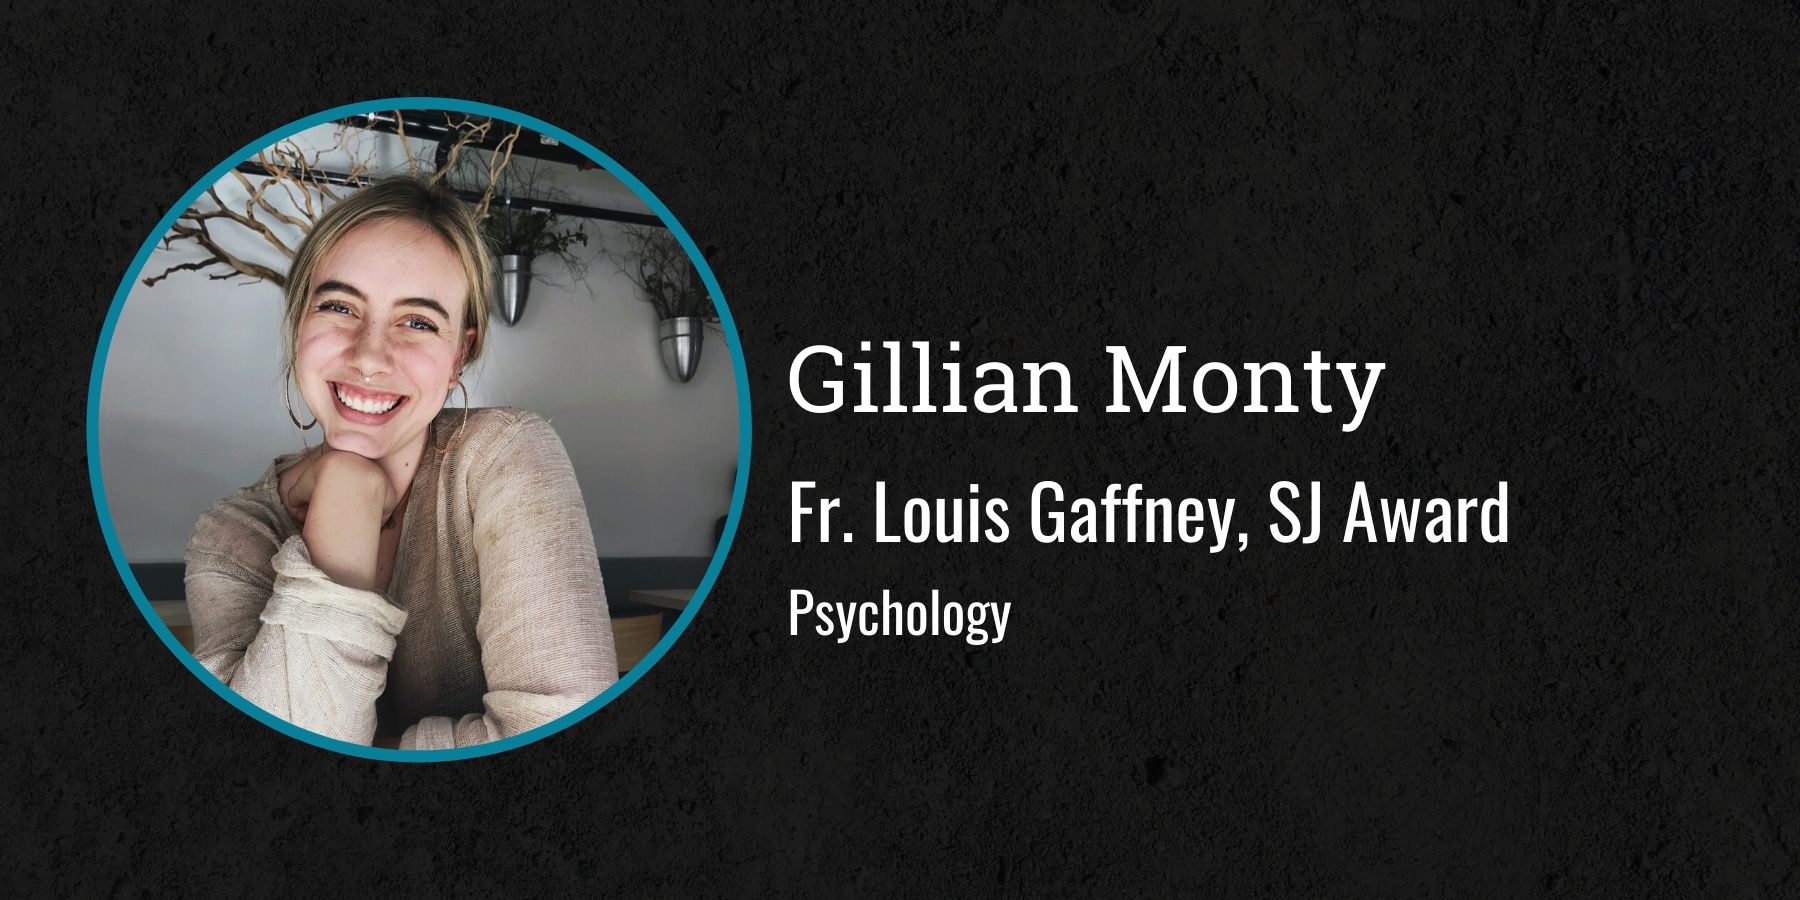 Photo of Gillian Monty and text Fr. Louis Gaffney, SJ Award, Psychology